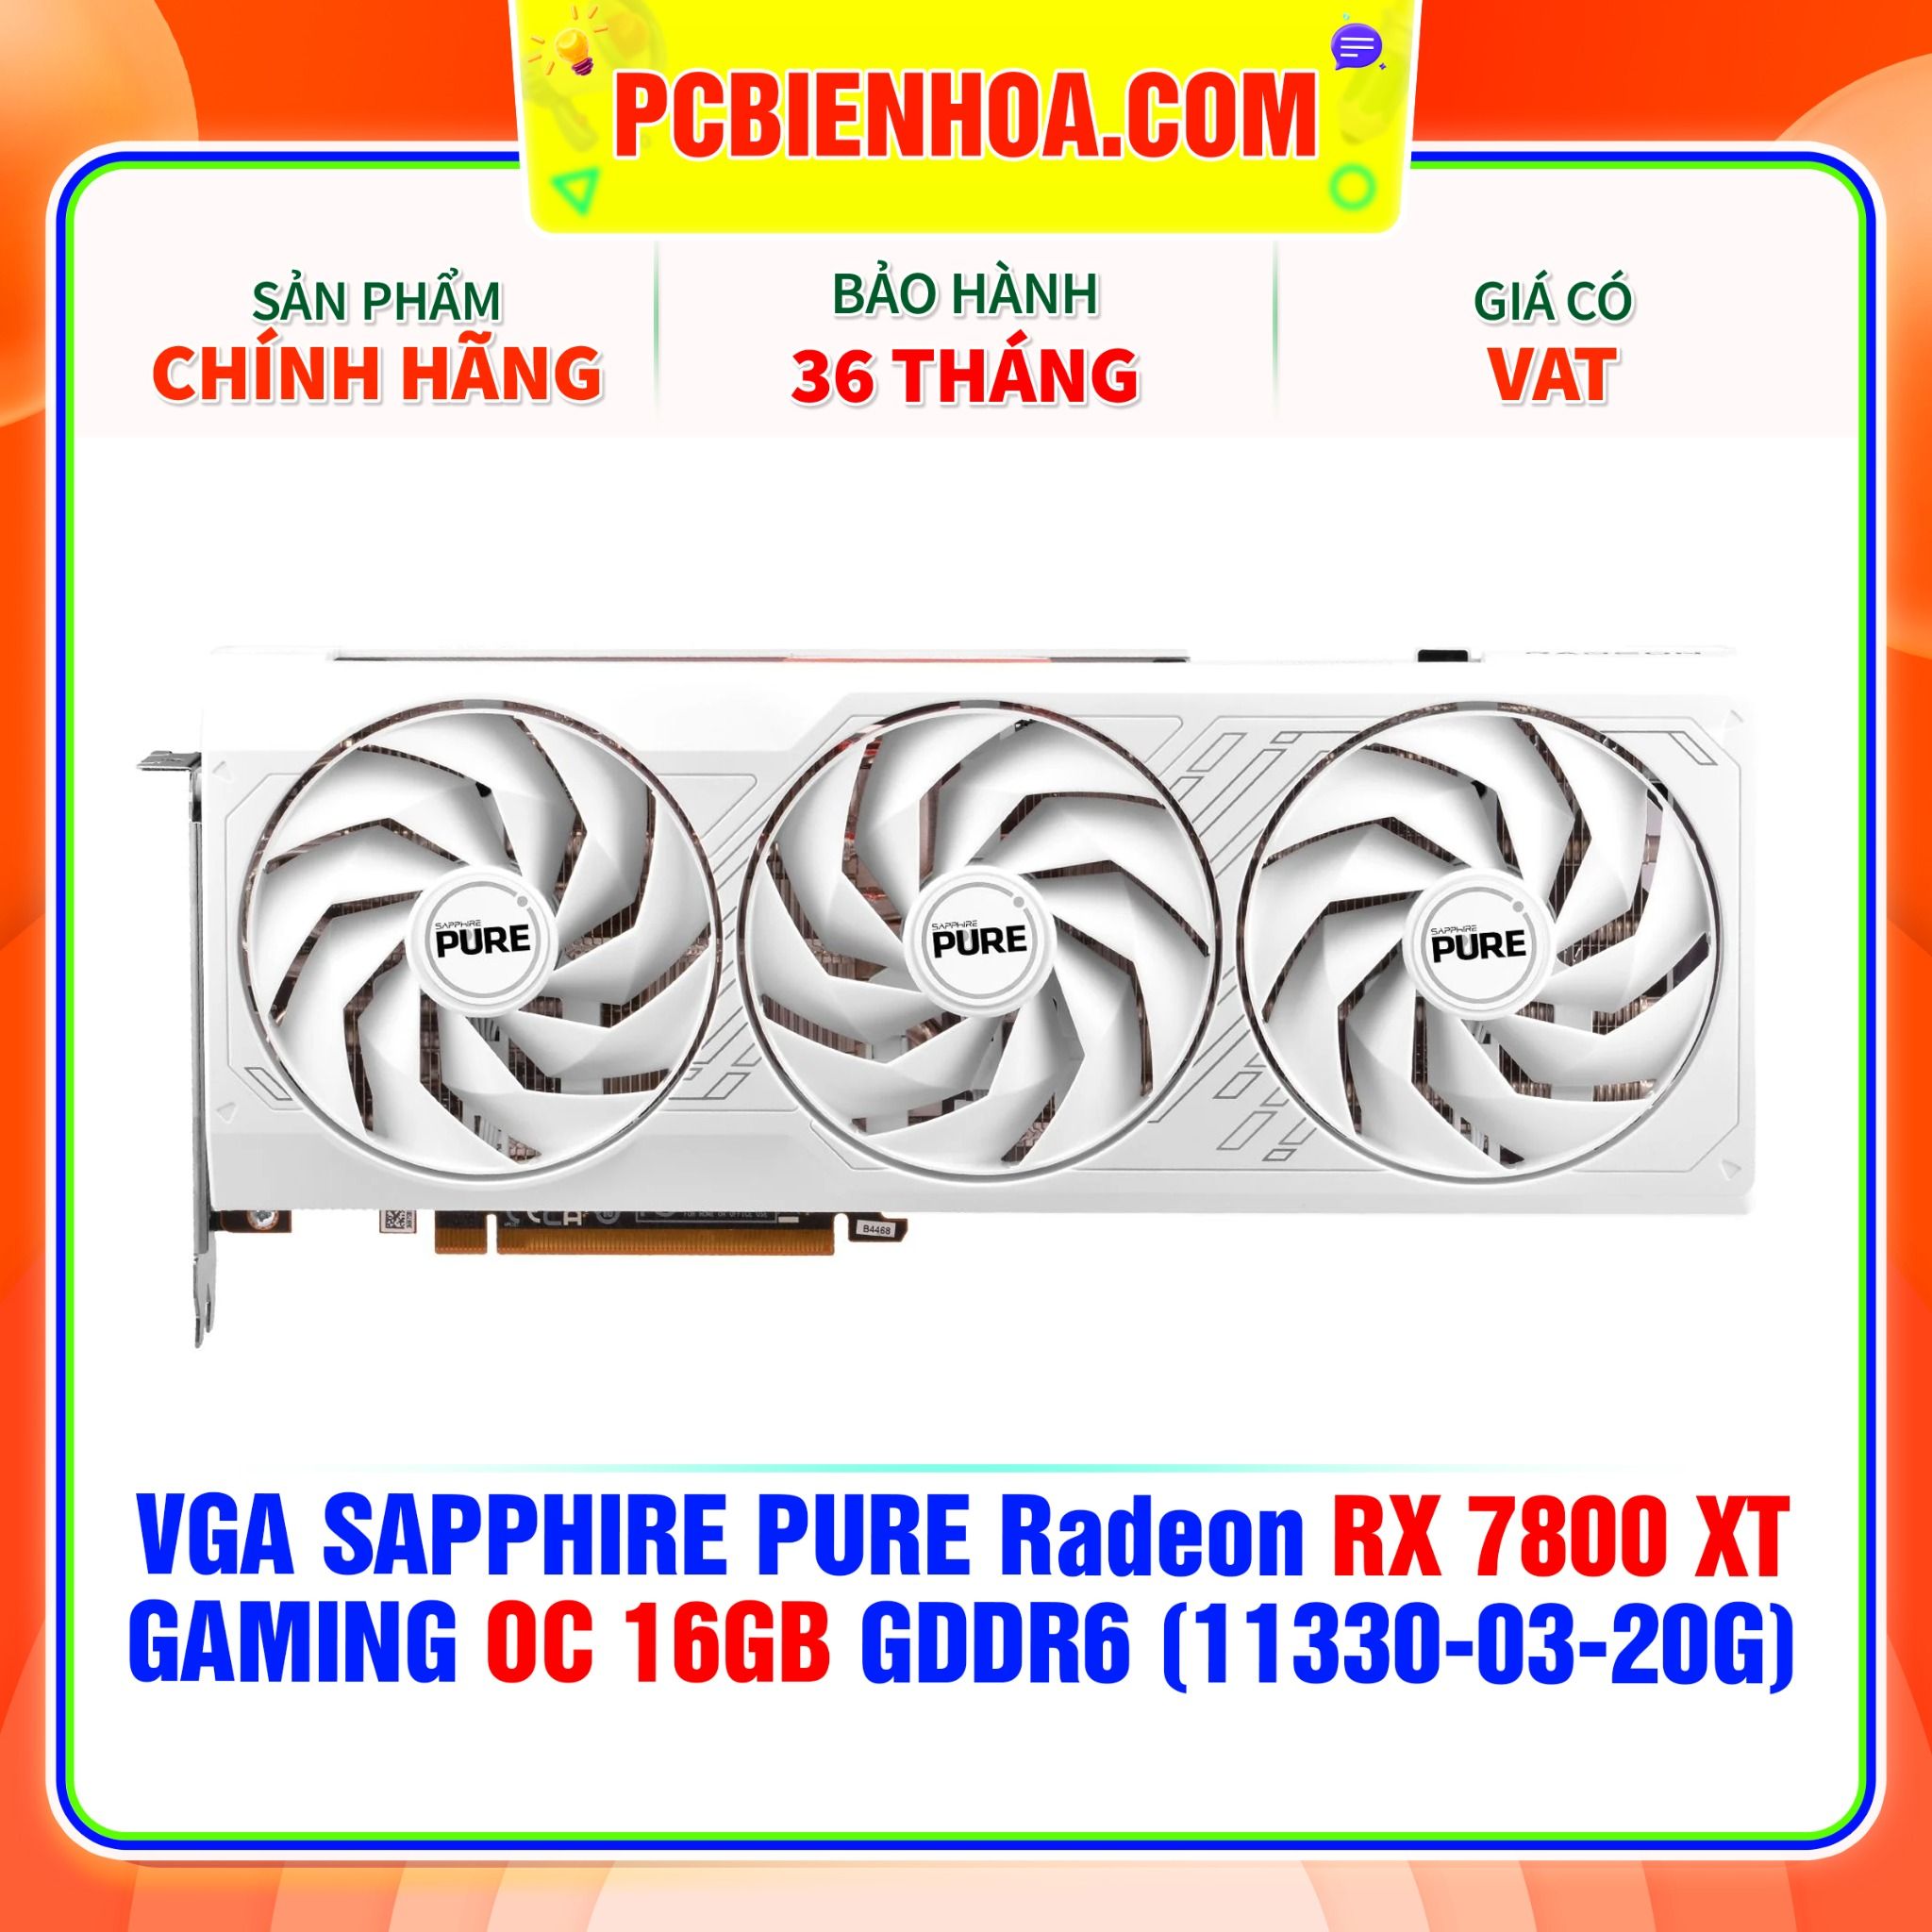  VGA SAPPHIRE PURE Radeon RX 7800 XT GAMING OC 16GB GDDR6 (11330-03-20G) 